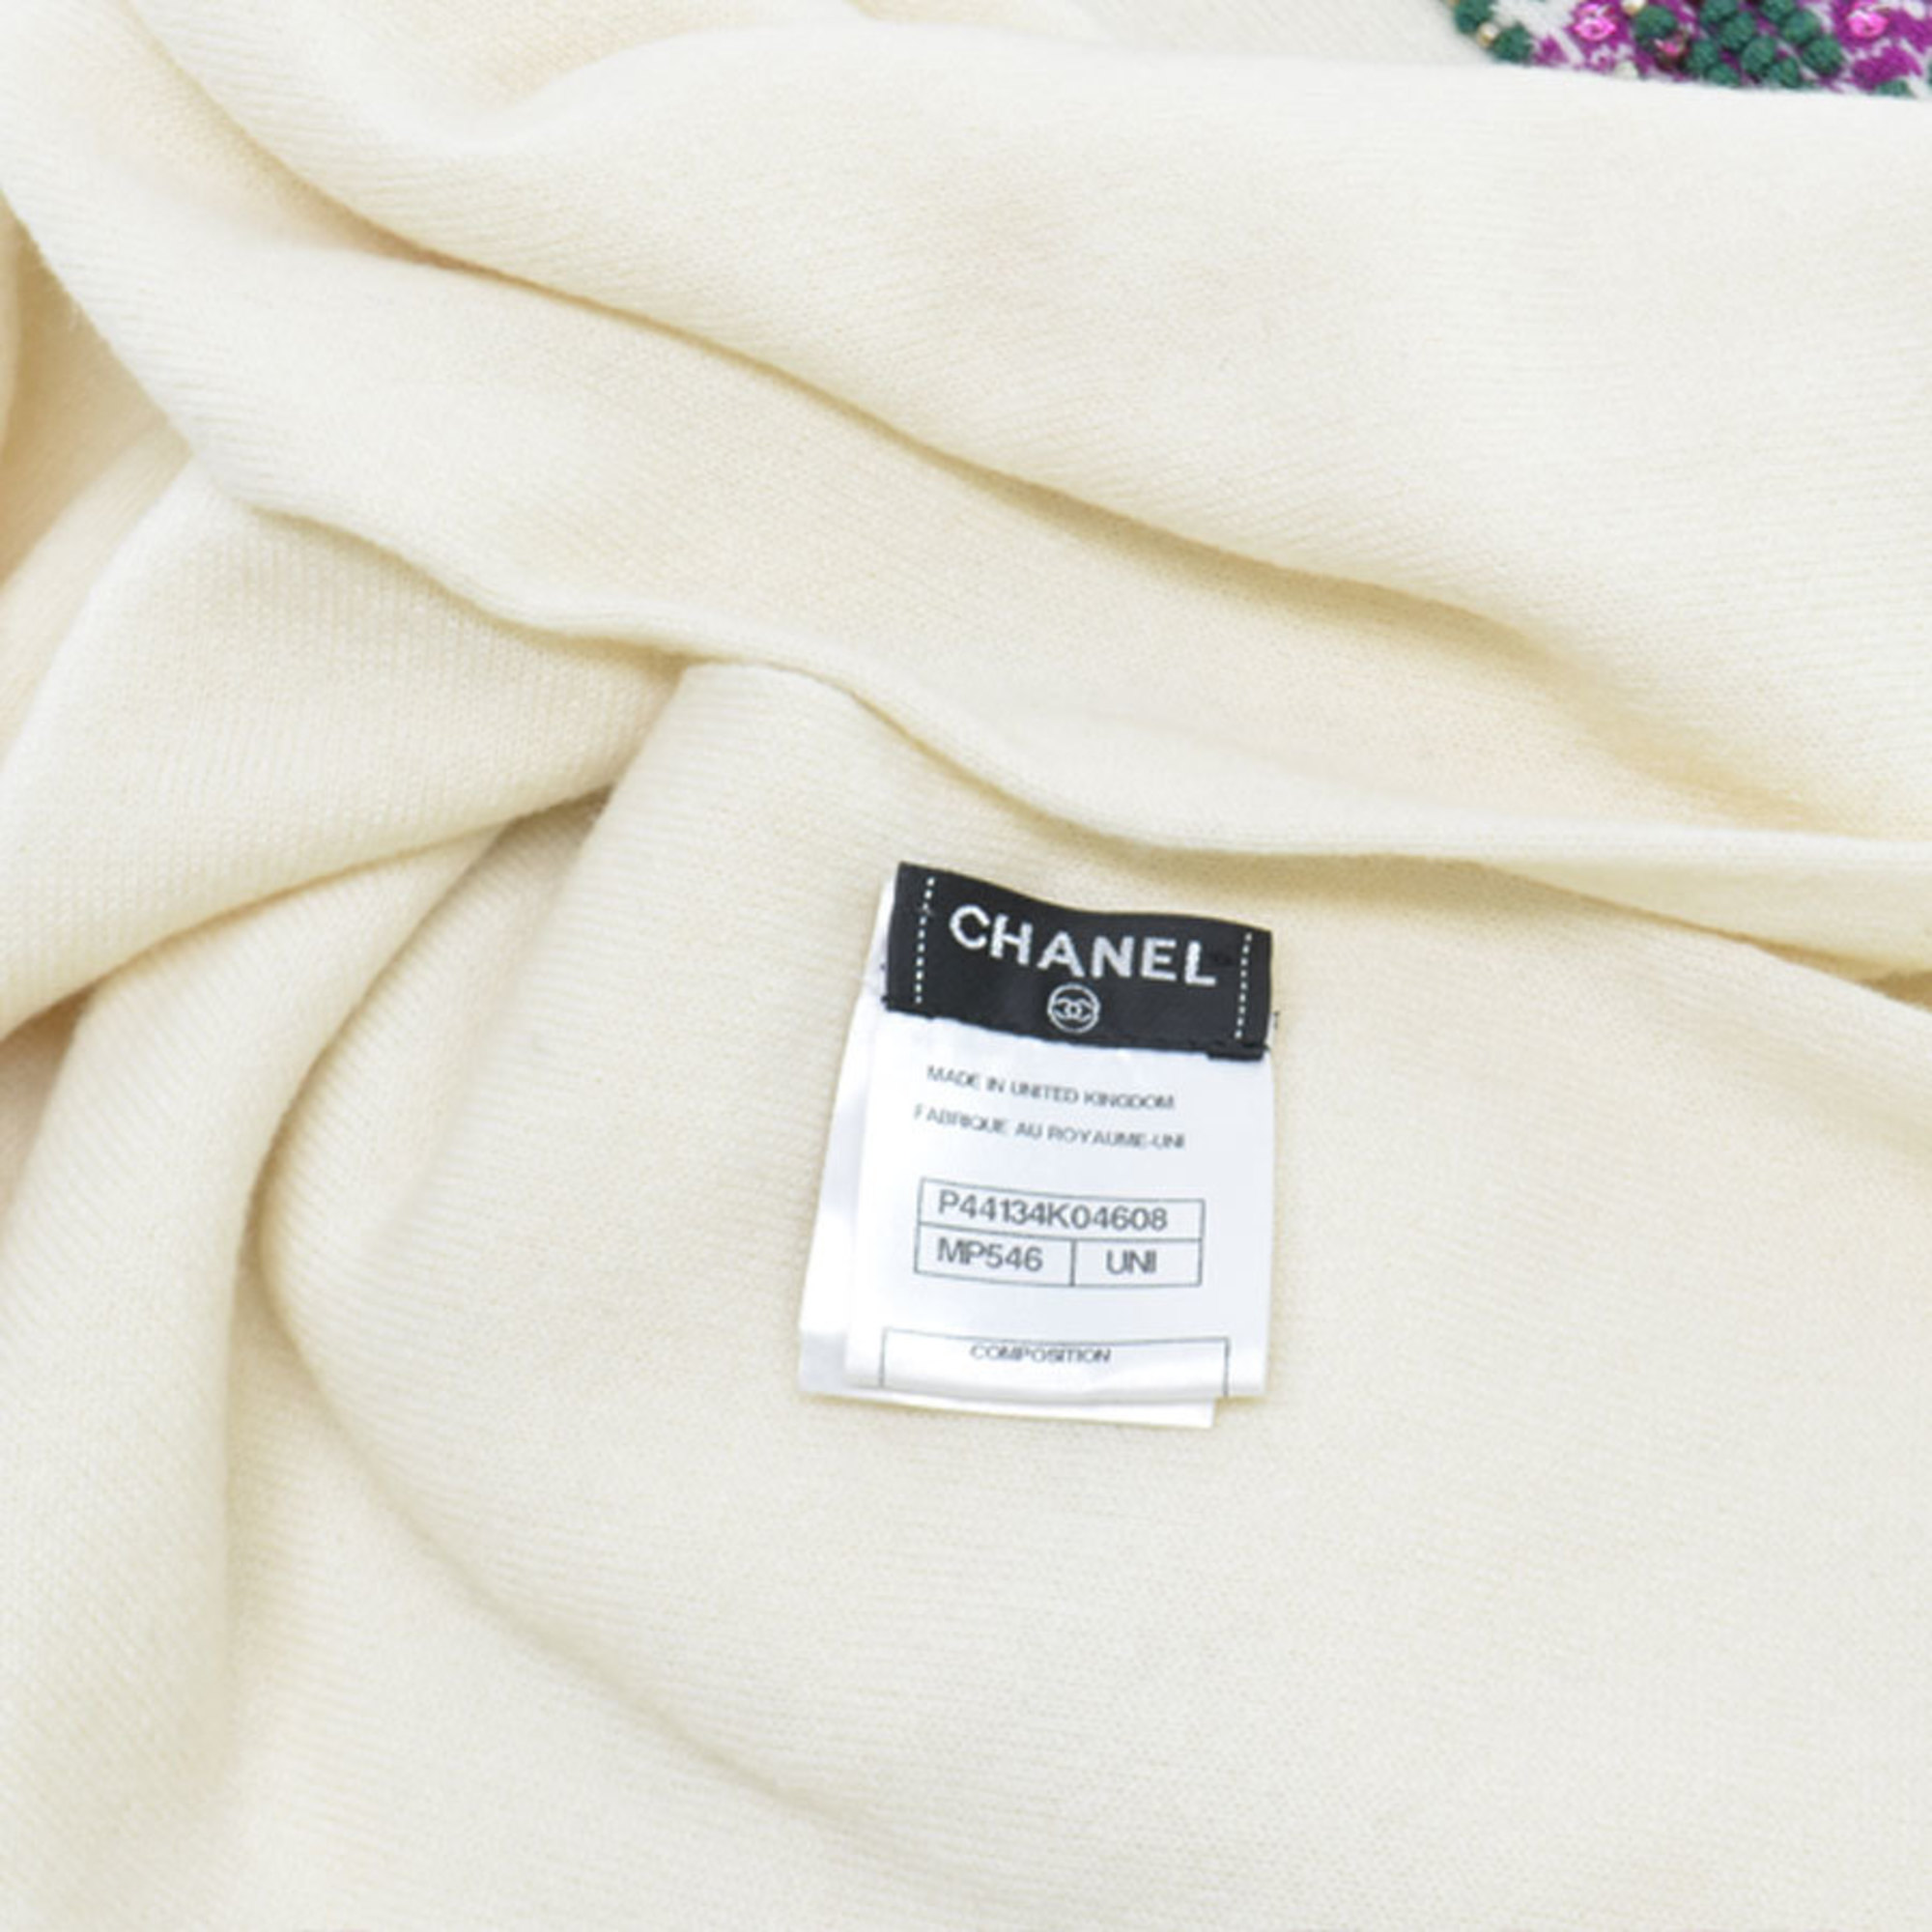 Chanel Scarf White Green Bordeaux Cashmere Ladies